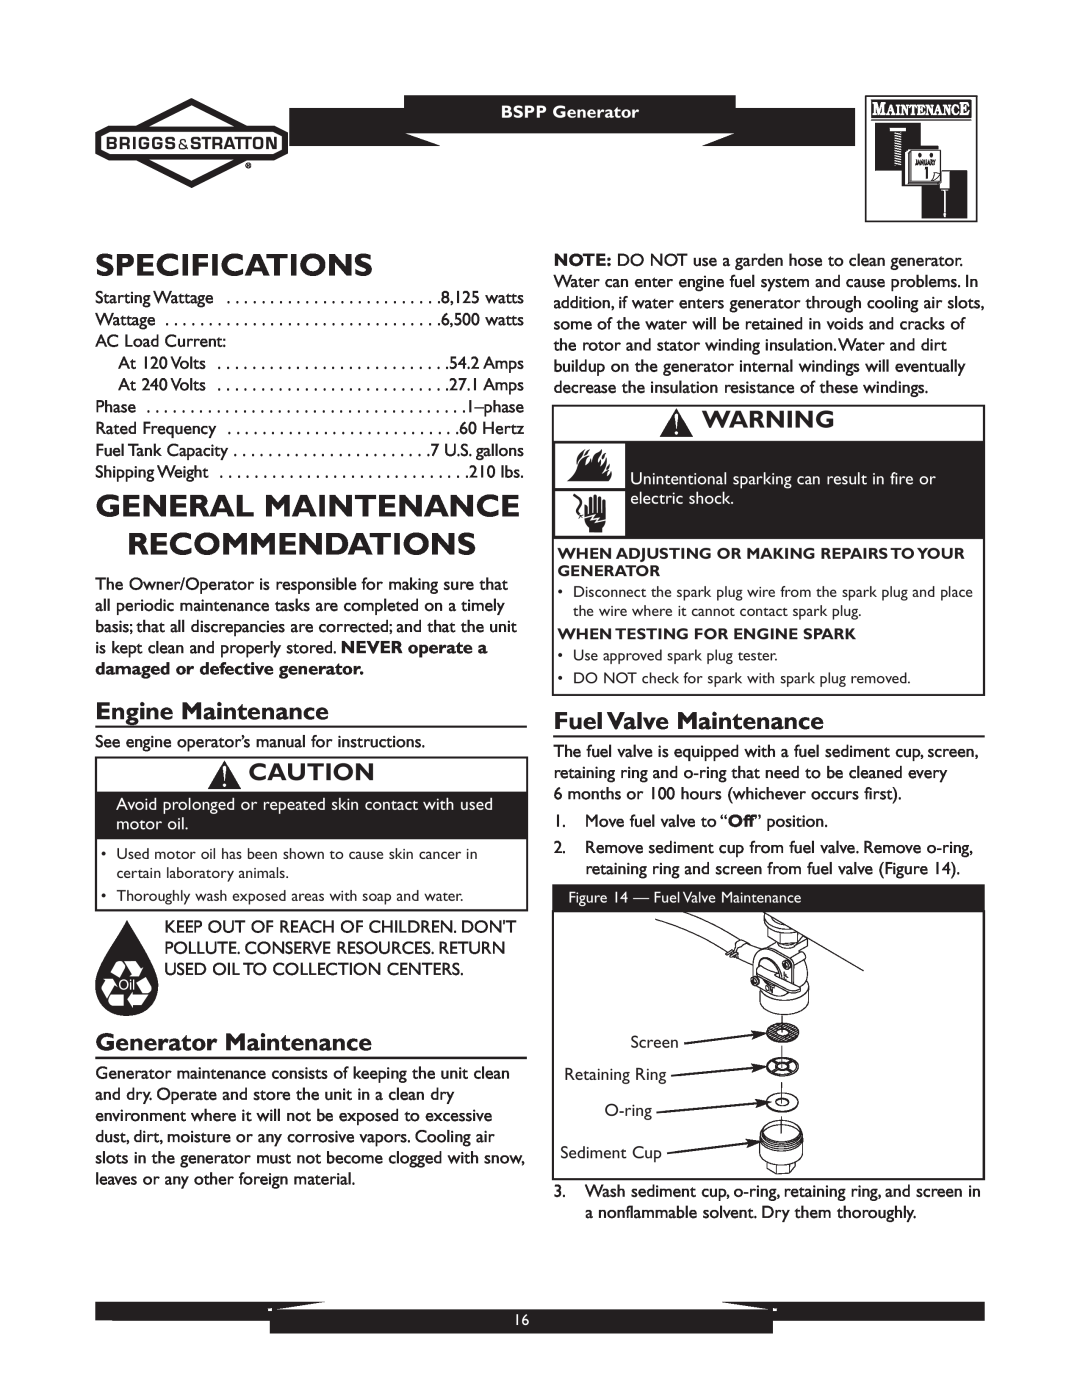 Briggs & Stratton 01933-1 Specifications, General Maintenance Recommendations, Engine Maintenance, Generator Maintenance 